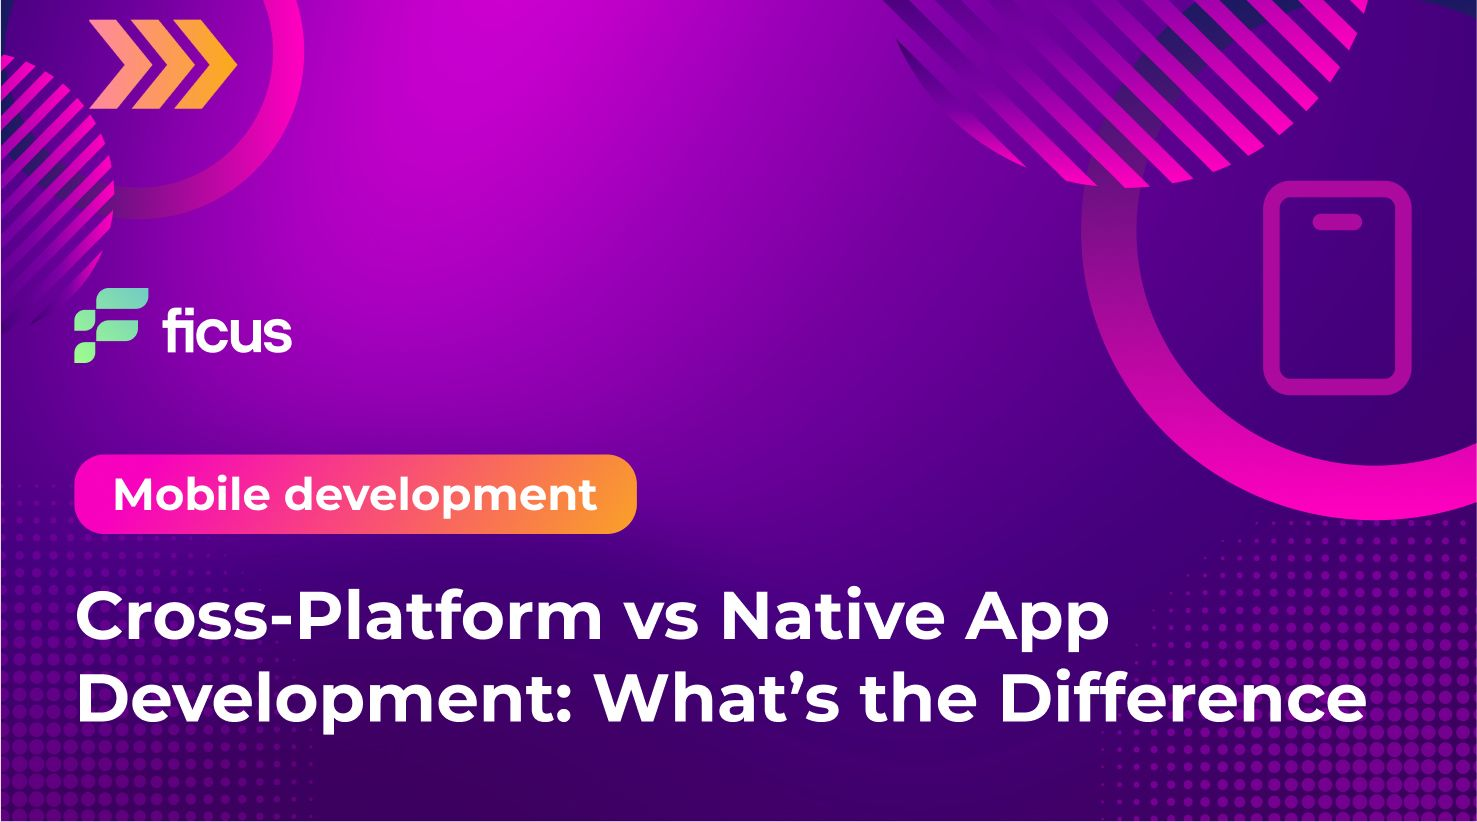 Cross-Platform vs Native App Development: What’s the Difference